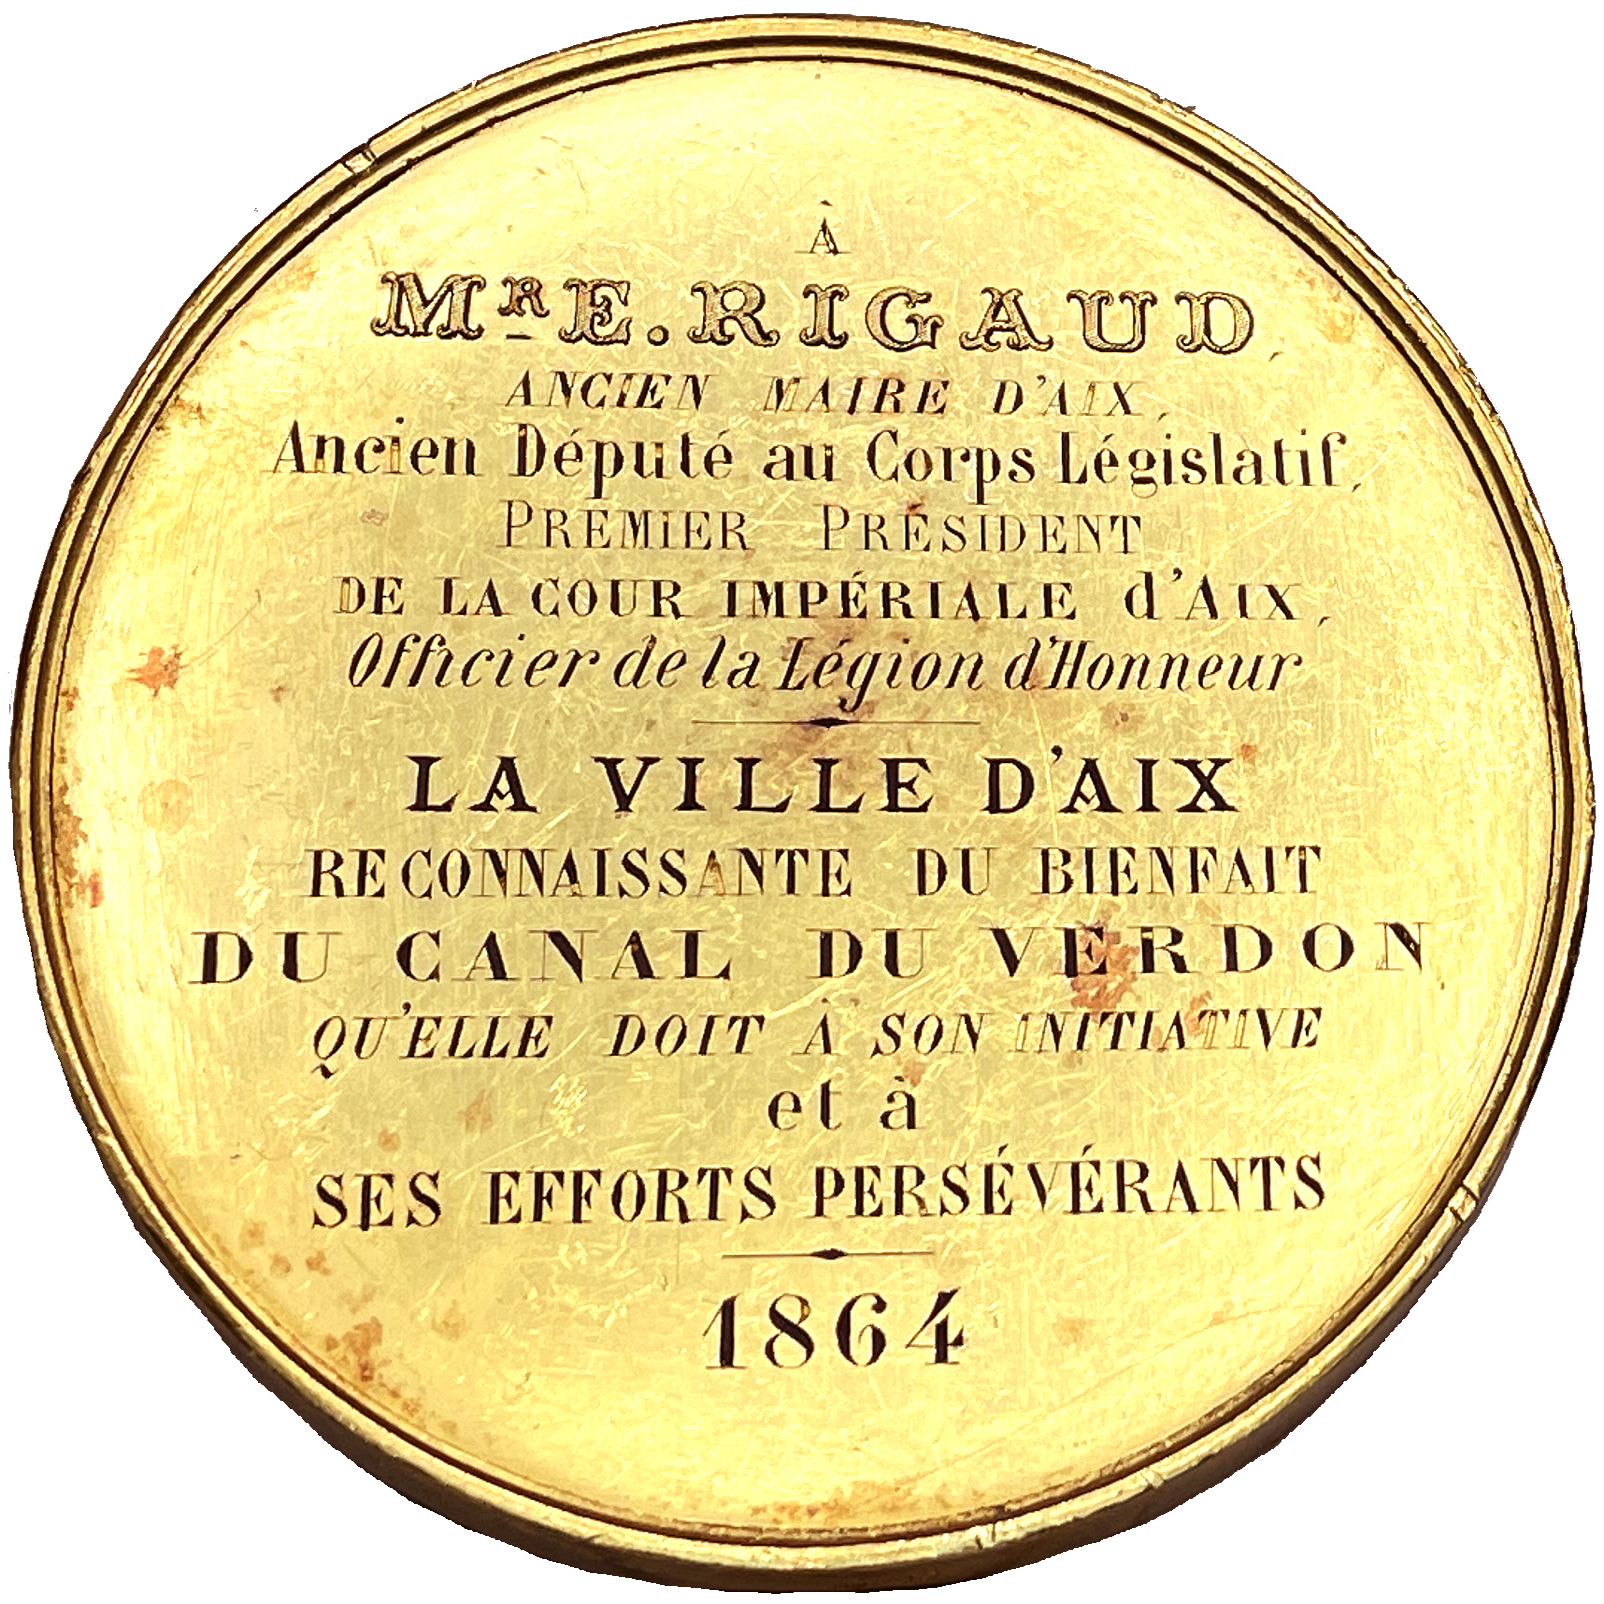 Frankrike, Napoleon III - Stor guldmedalj tilldelad borgmästaren i Aix 1864 av Merley - RRR